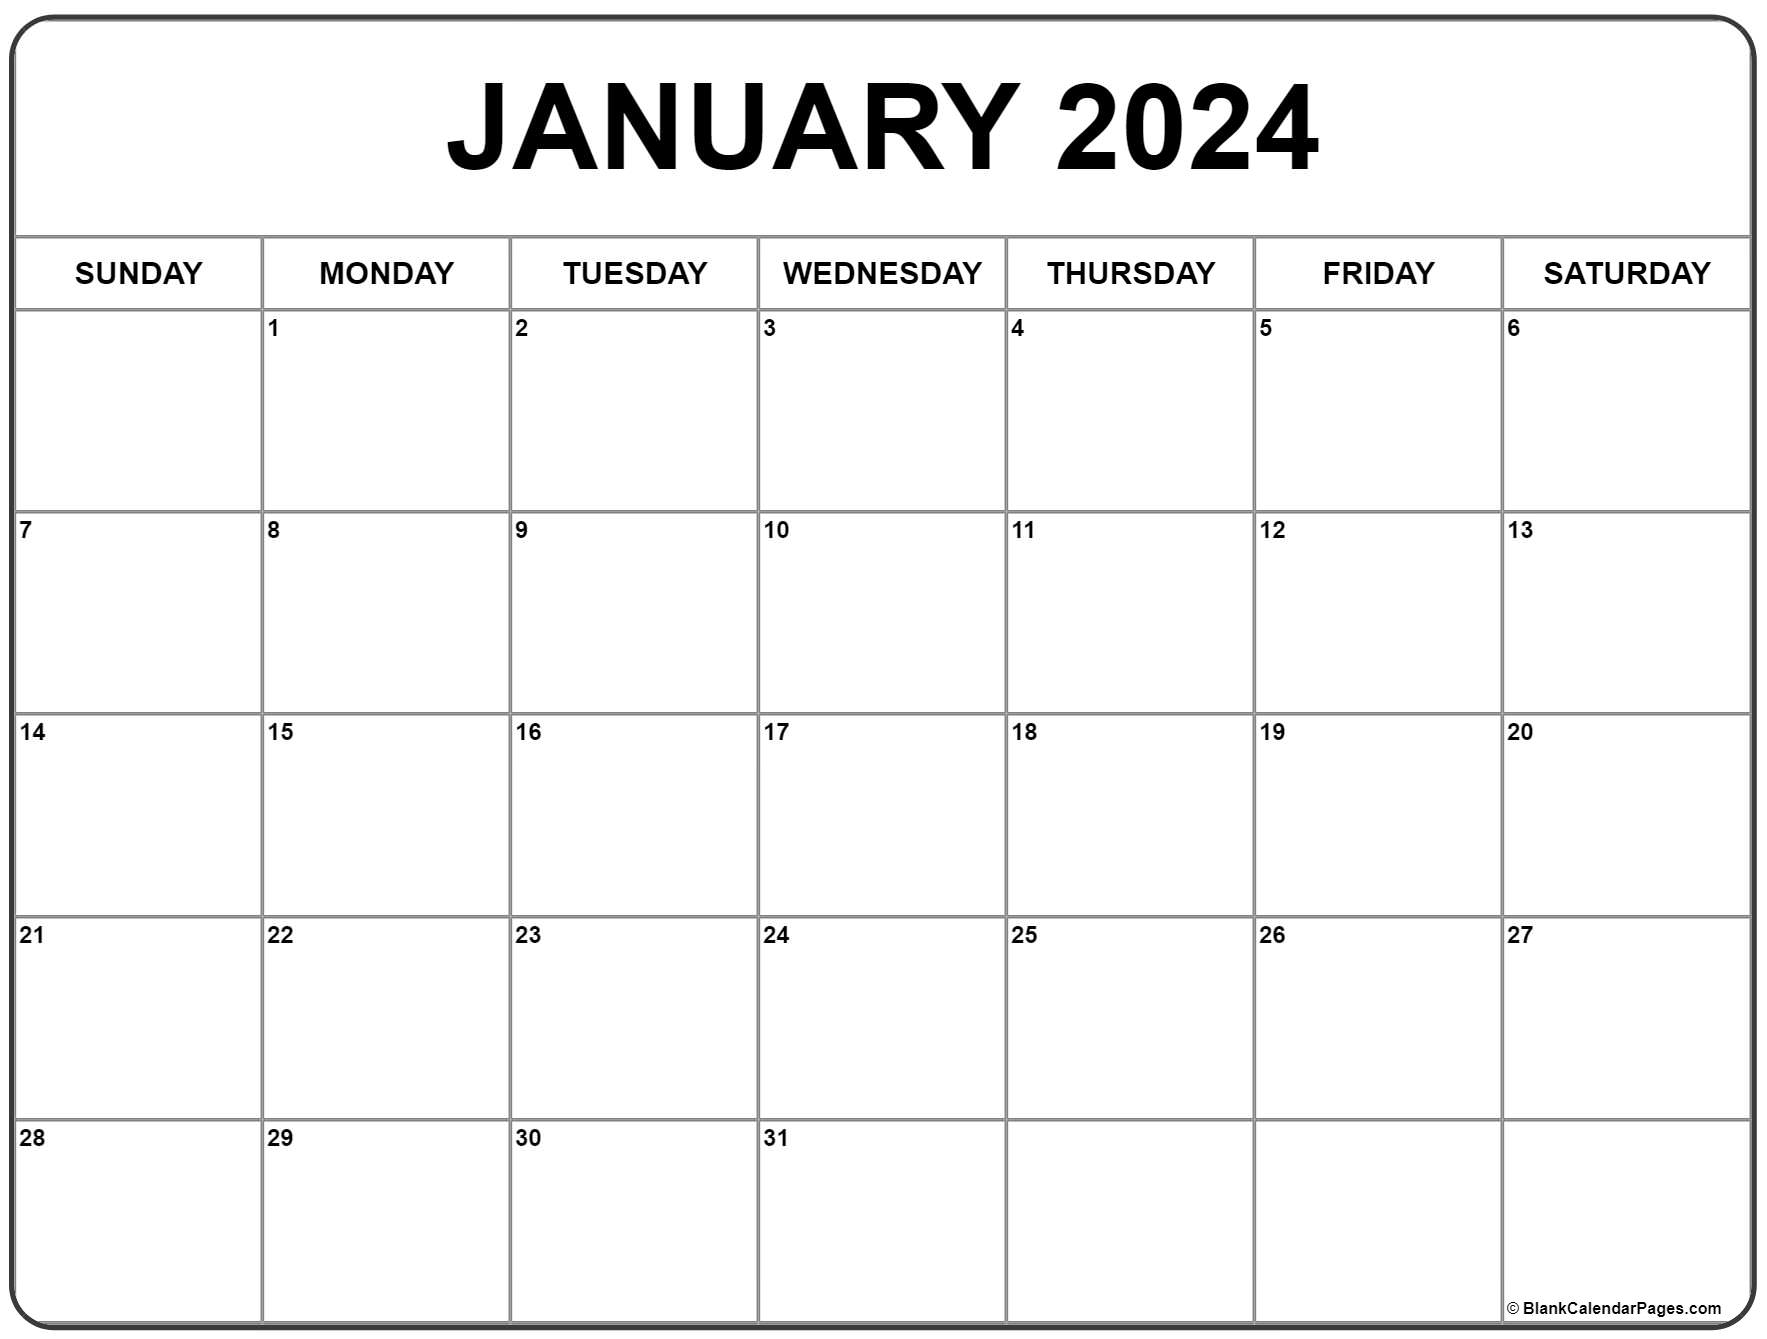 January 2024 Calendar | Free Printable Calendar for Free Printable Monthly Calendar 2024